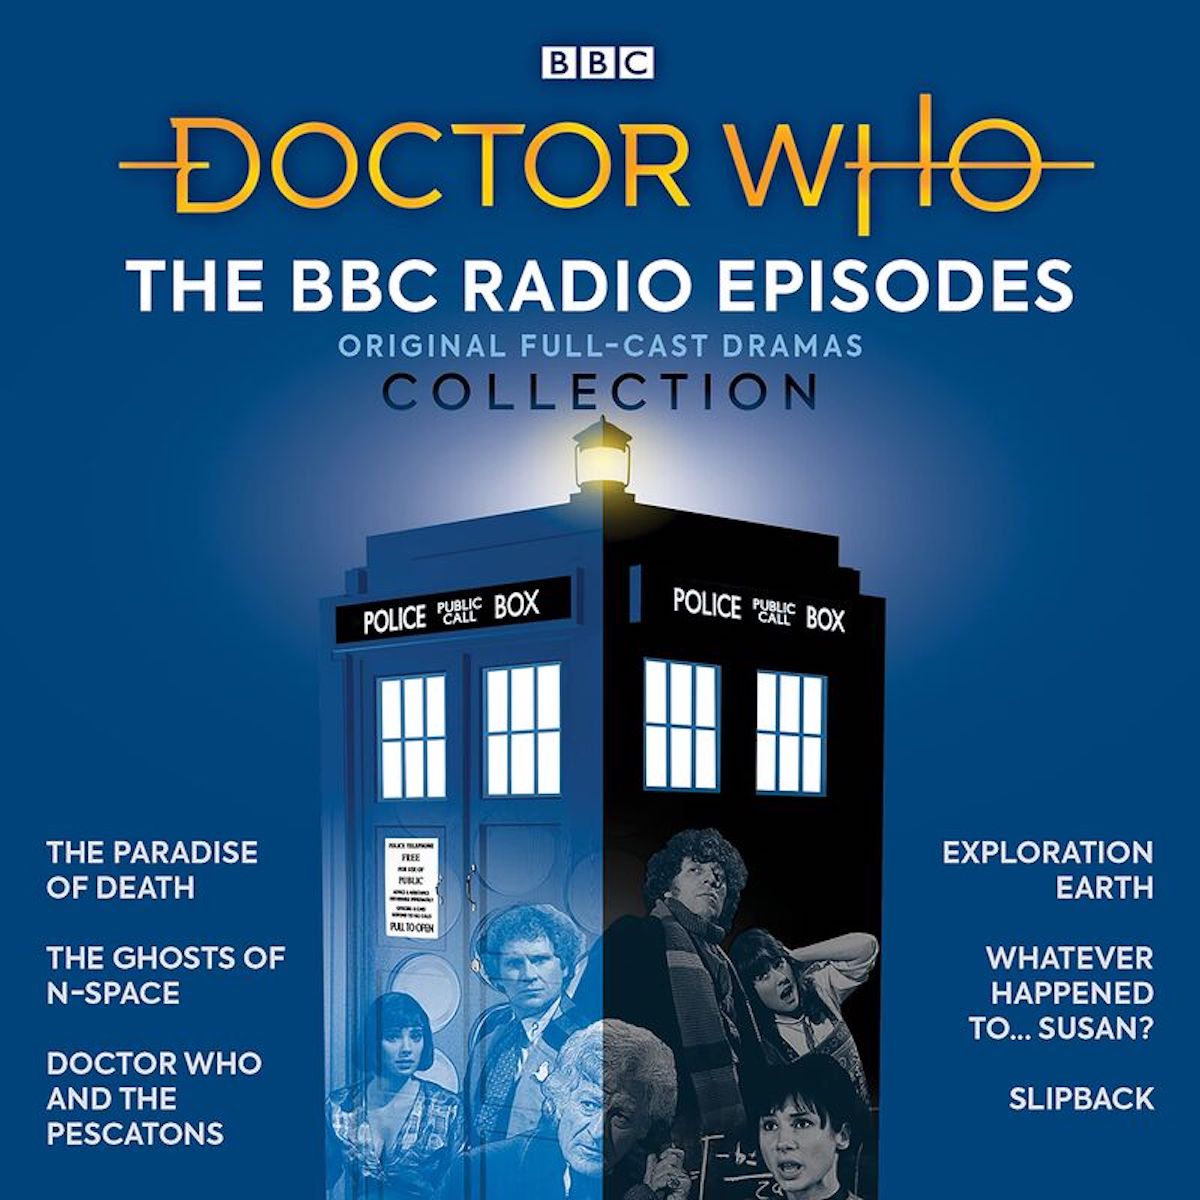 The BBC Radio Episodes